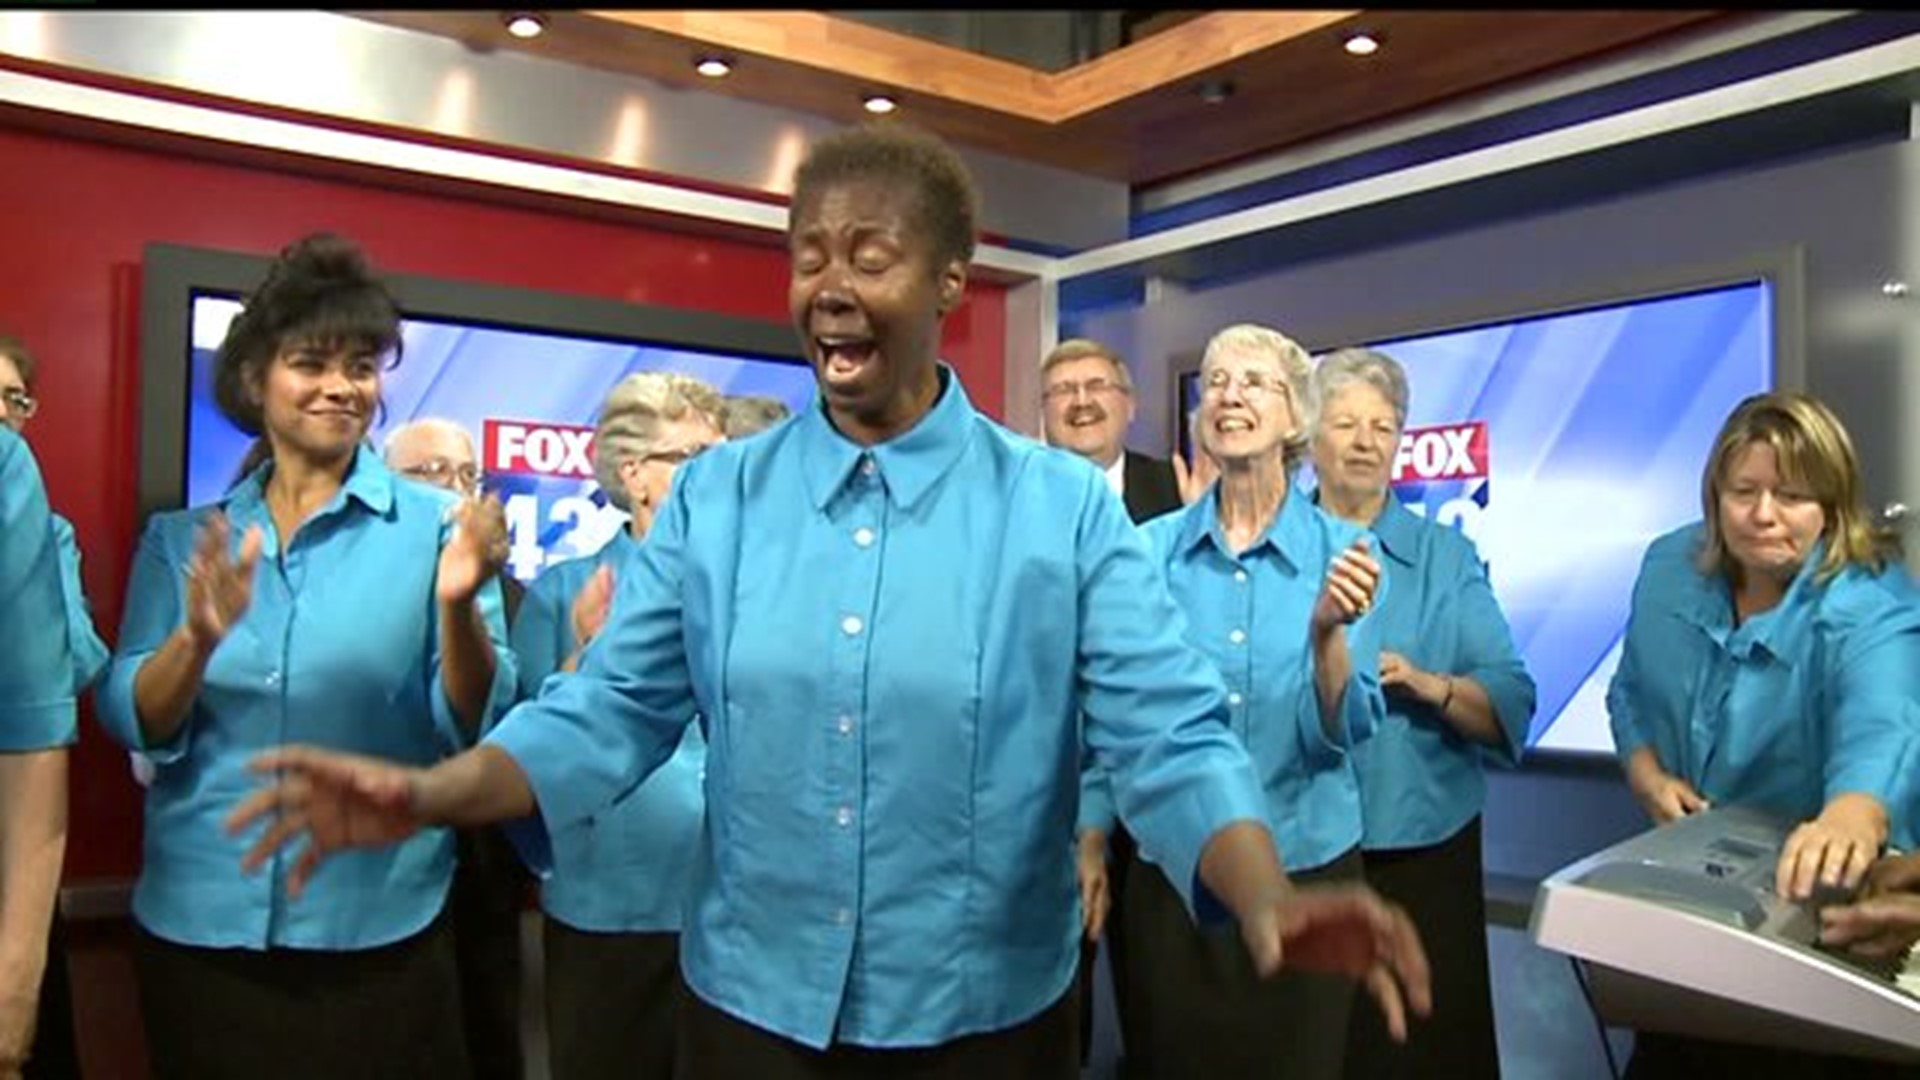 York County Gospel Choir gets national attention